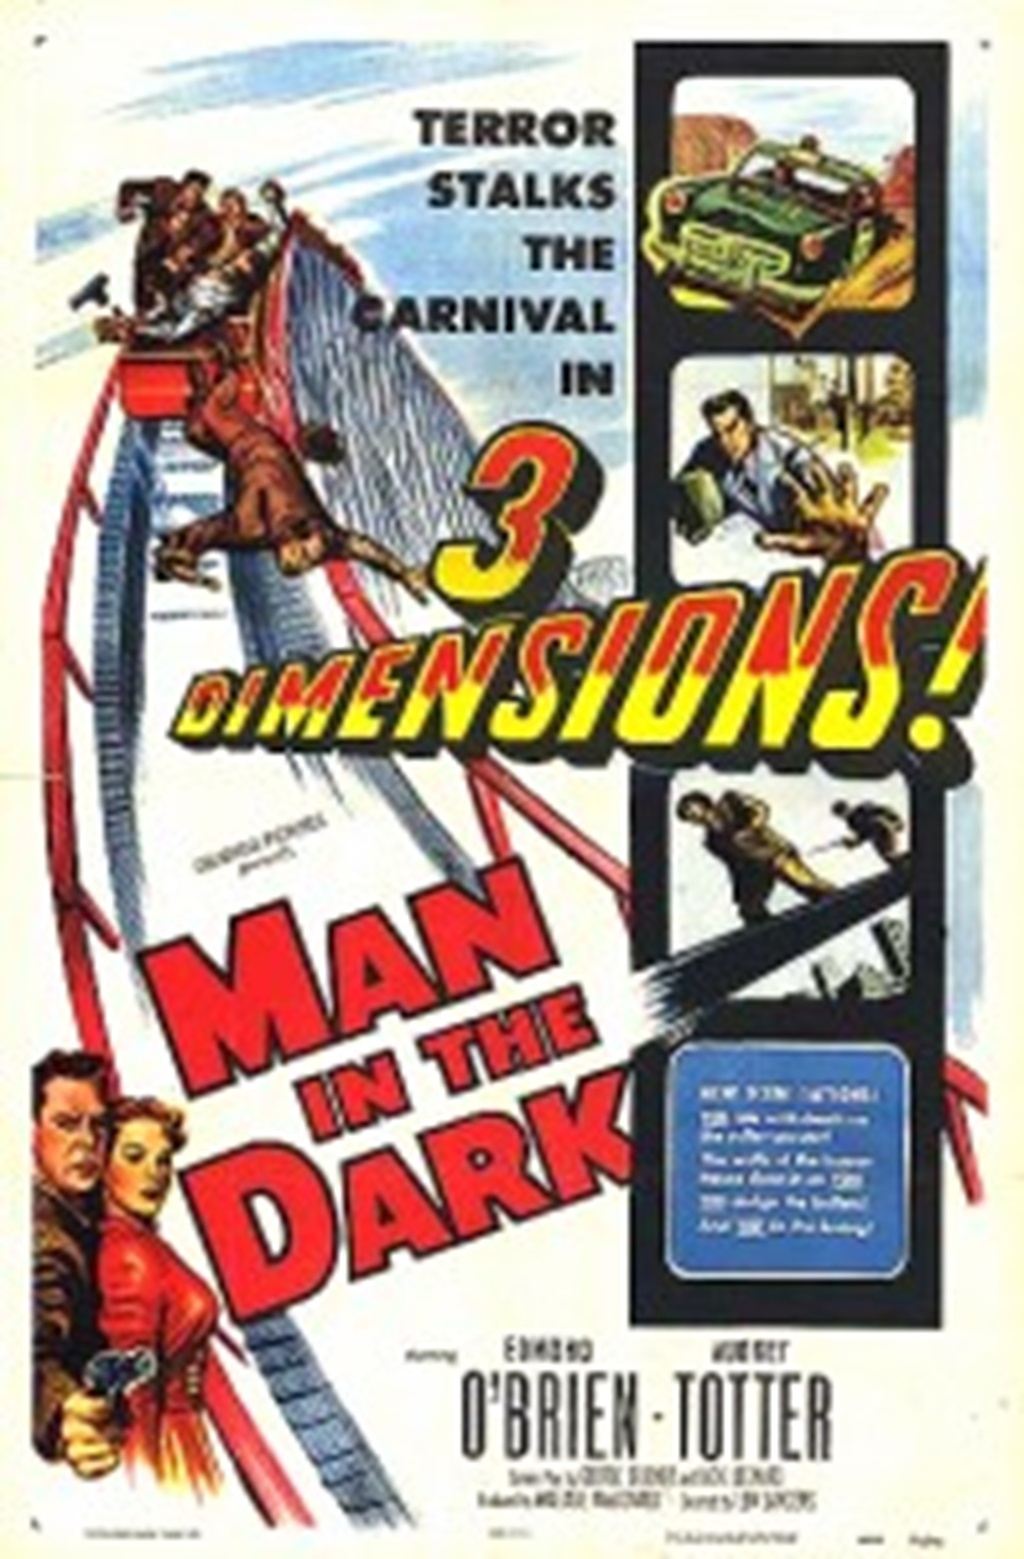 Savant 3-D Blu-ray Review: “Man in the Dark” (1953)